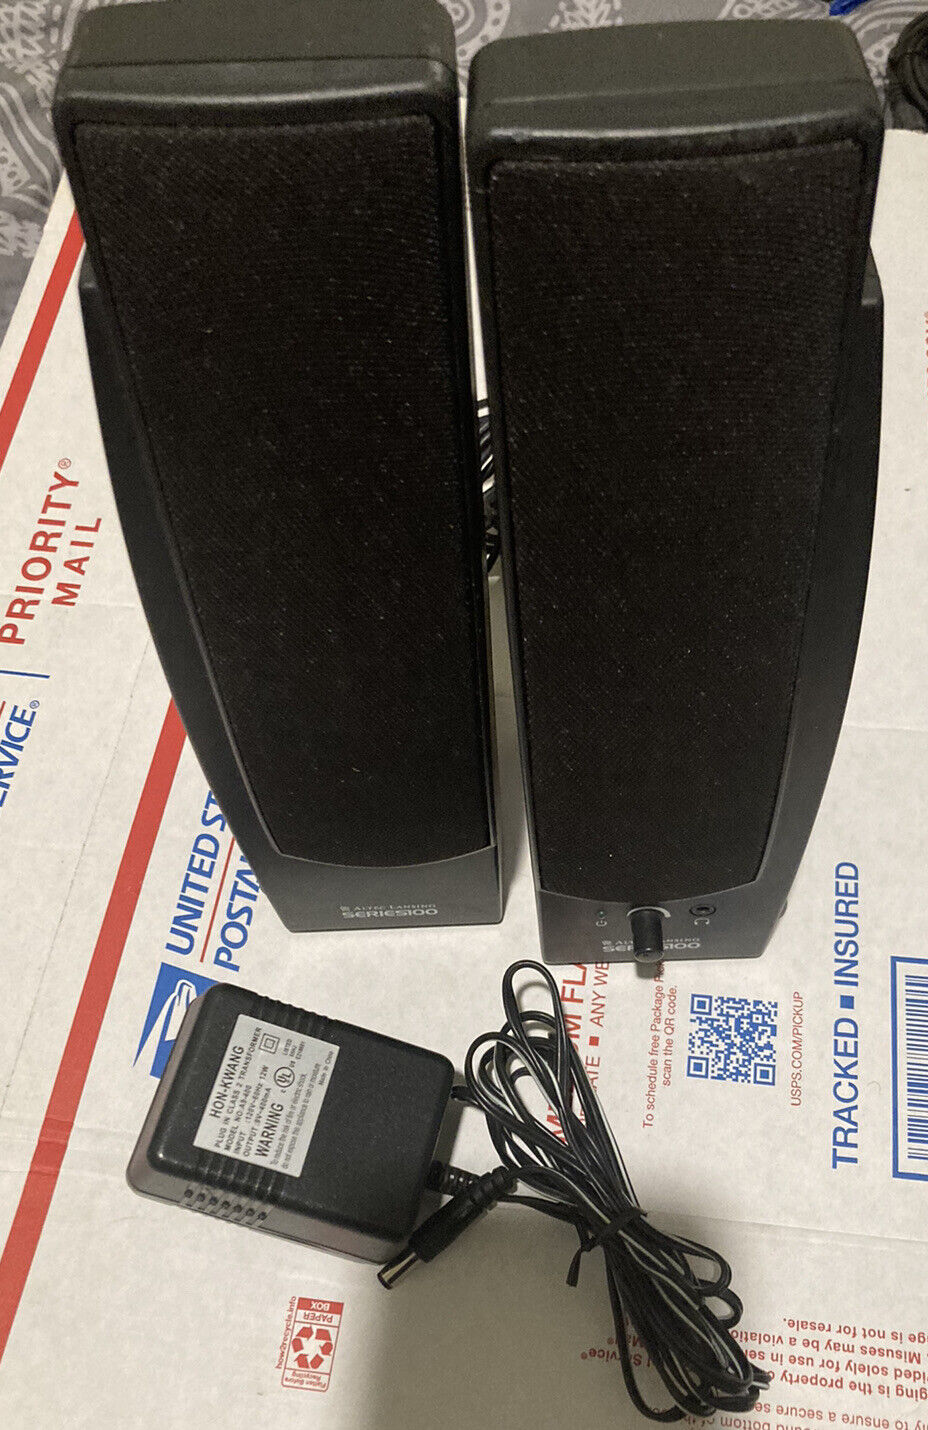 Altec Lansing Series 100 Speaker System Model 120 speakers with AC Adapter